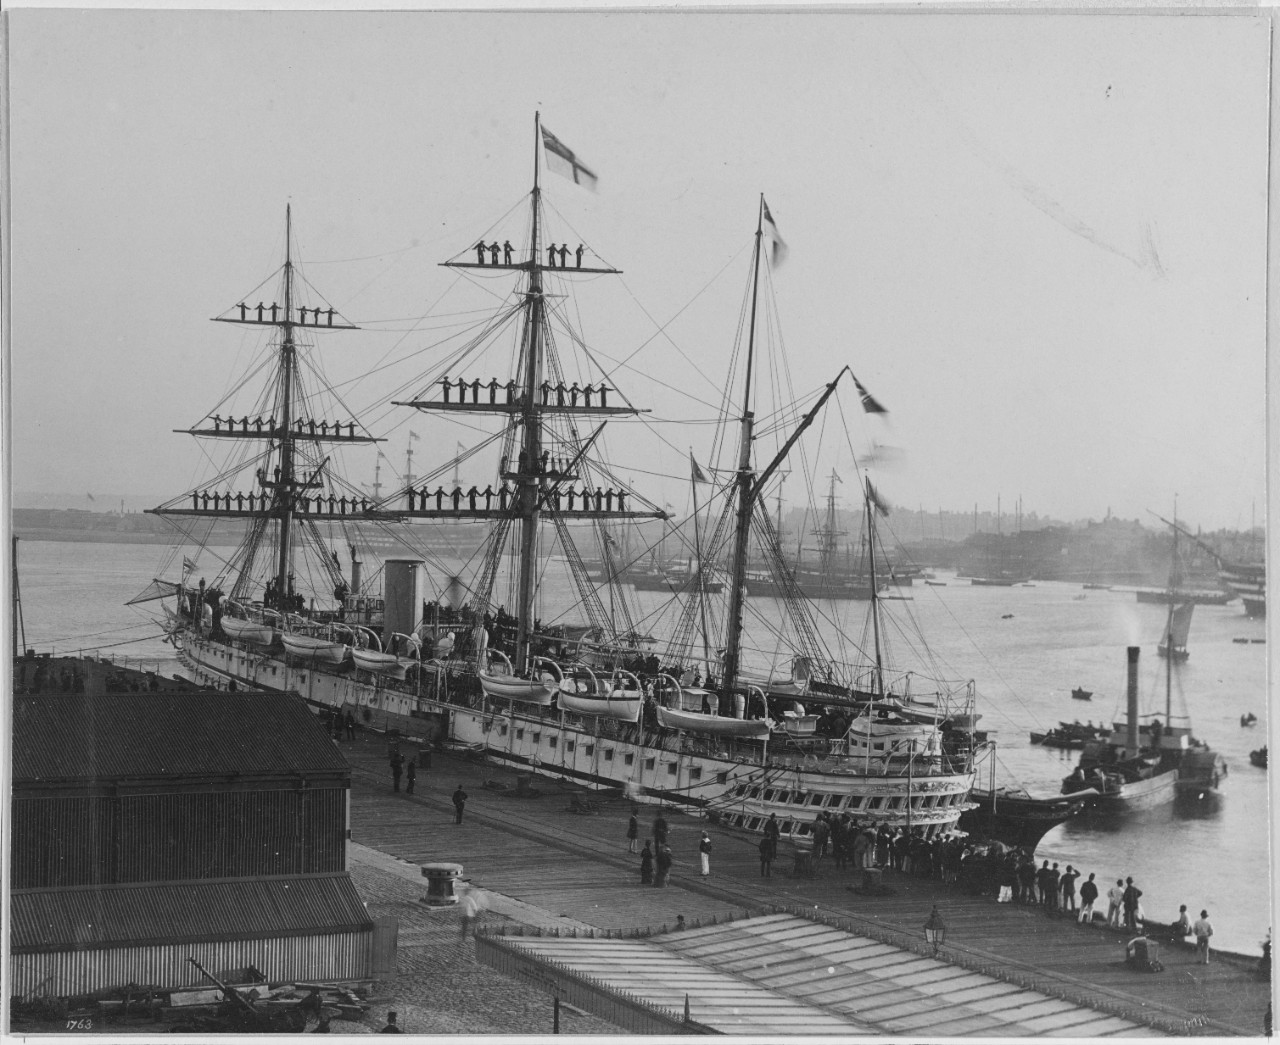 HMS JUMNA (British Transport, 1866) with crew manning the yards.